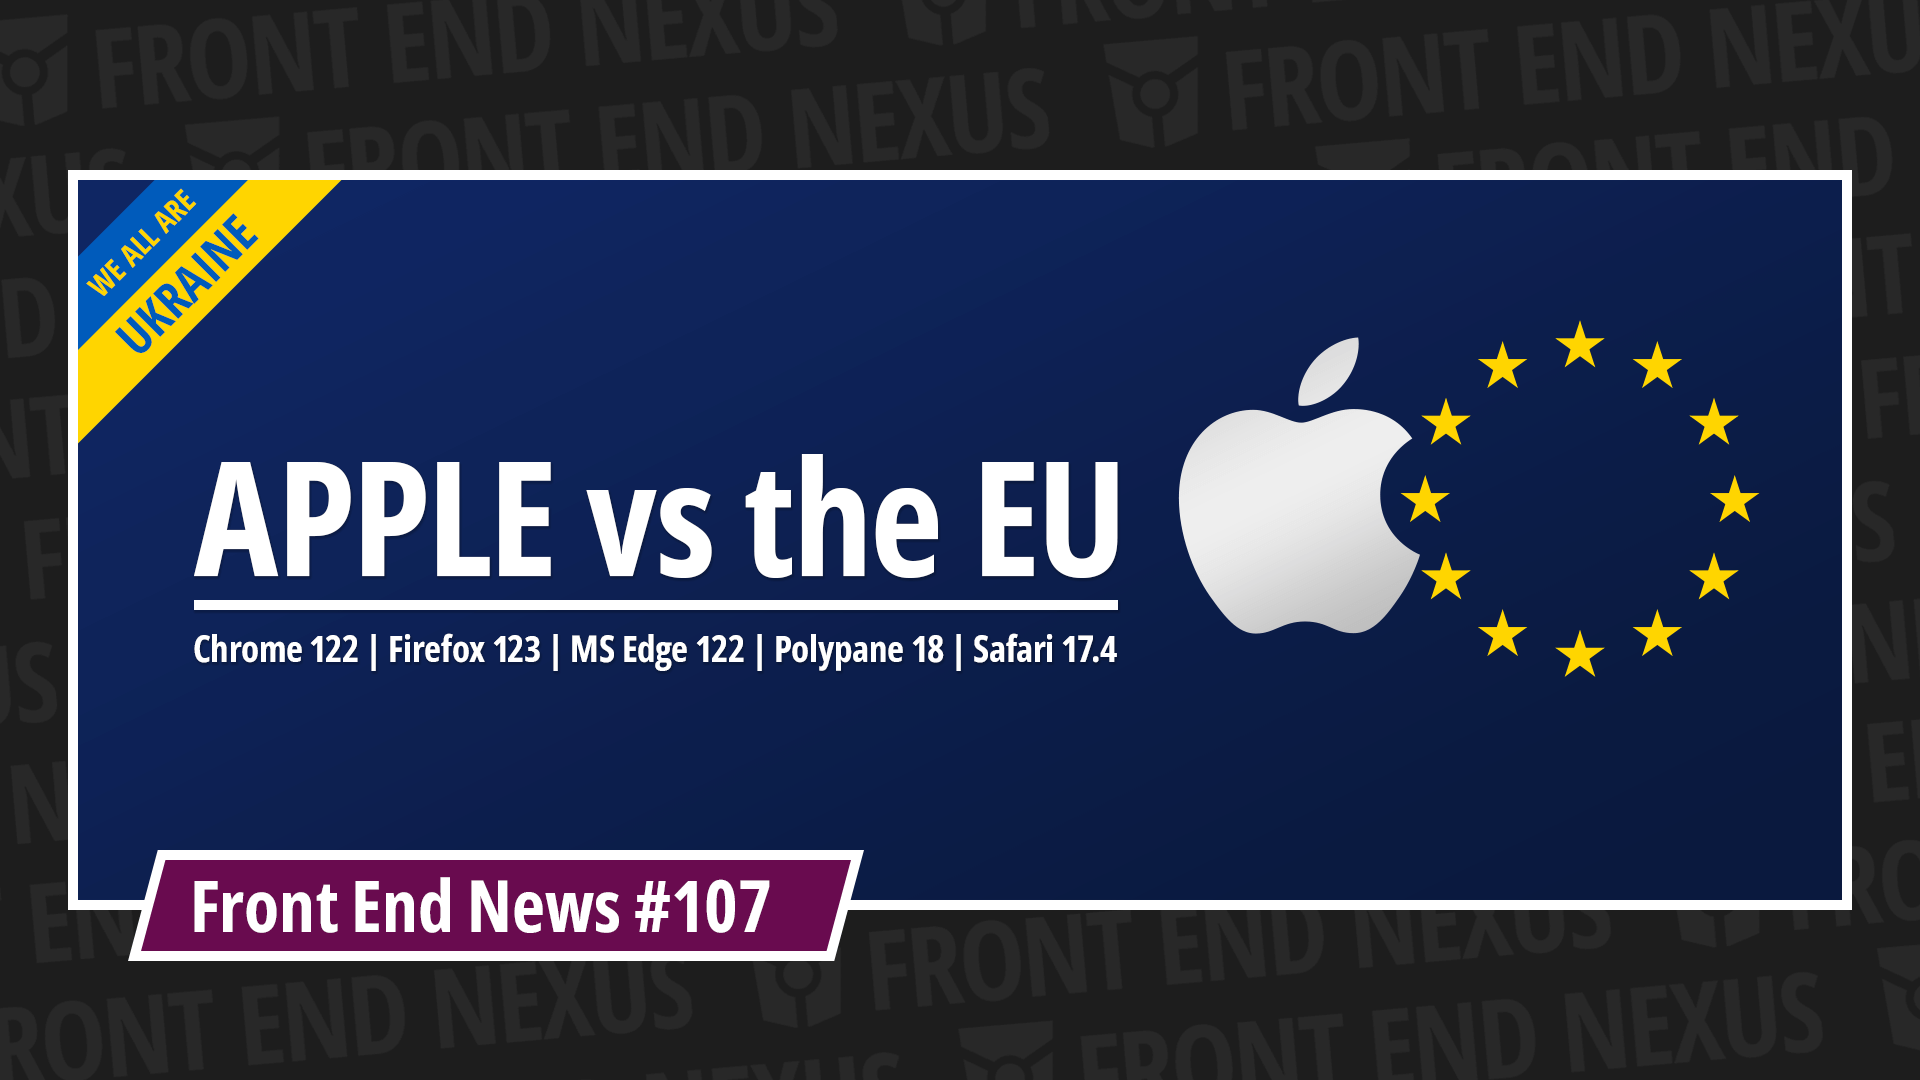 Apple vs the EU, Chrome 122, Firefox 123, MS Edge 122, Polypane 18, Safari 17.4, and more | Front End News #107